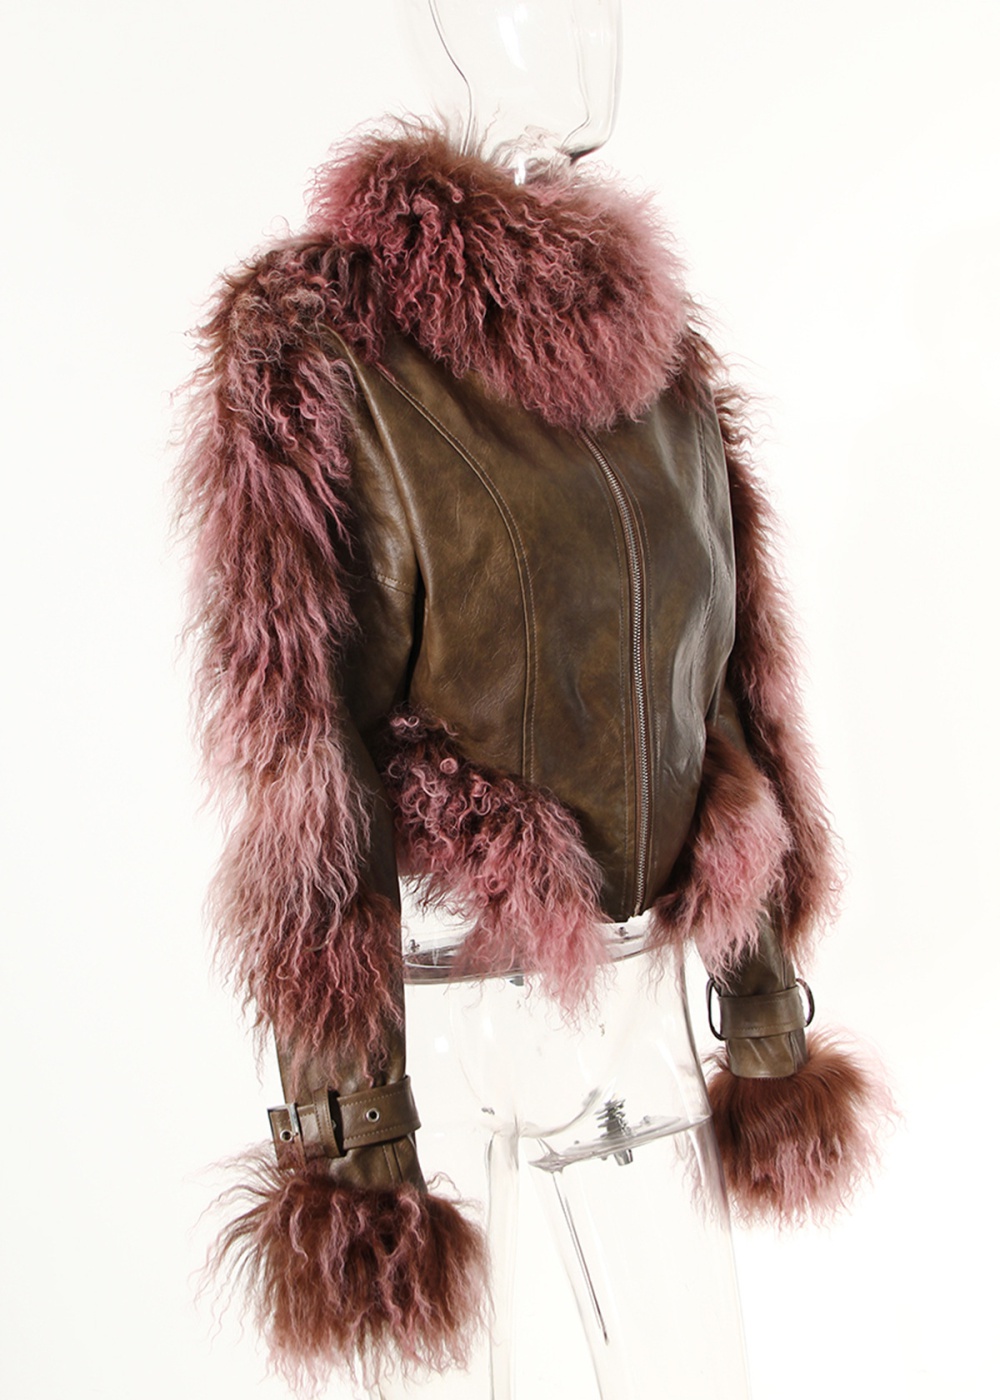 Shoulder pads spicegirl leather coat winter coat for women